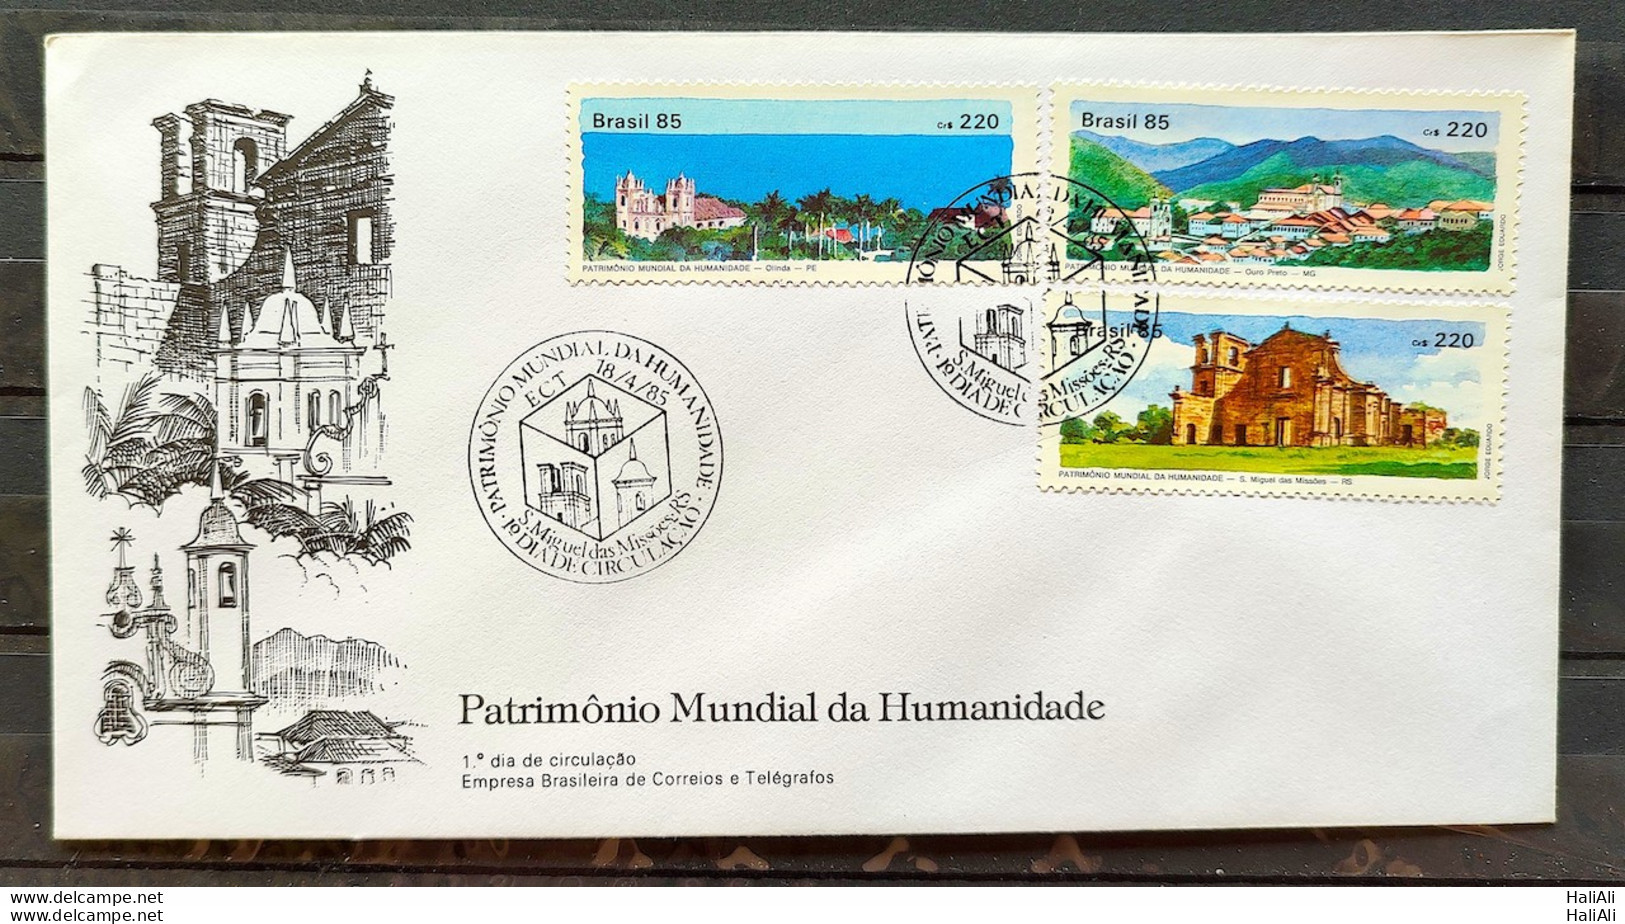 Brazil Envelope FDC 356 1985 World Heritage Olinda Missions Ouro Preto CBC RS 01 - FDC